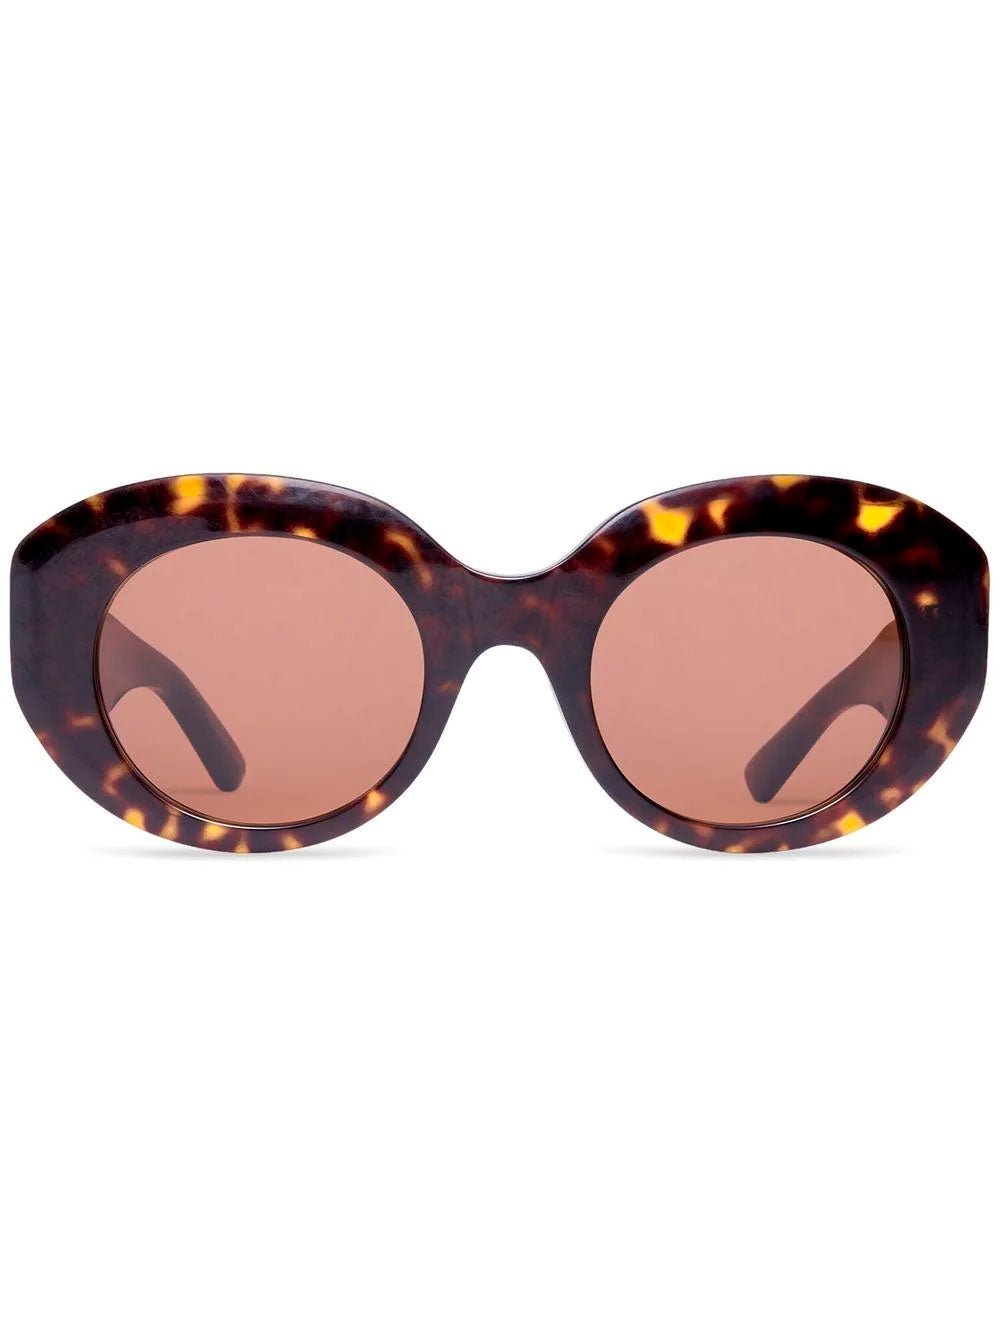 BalenciagaRive Gauche Round Sunglasses at Fashion Clinic